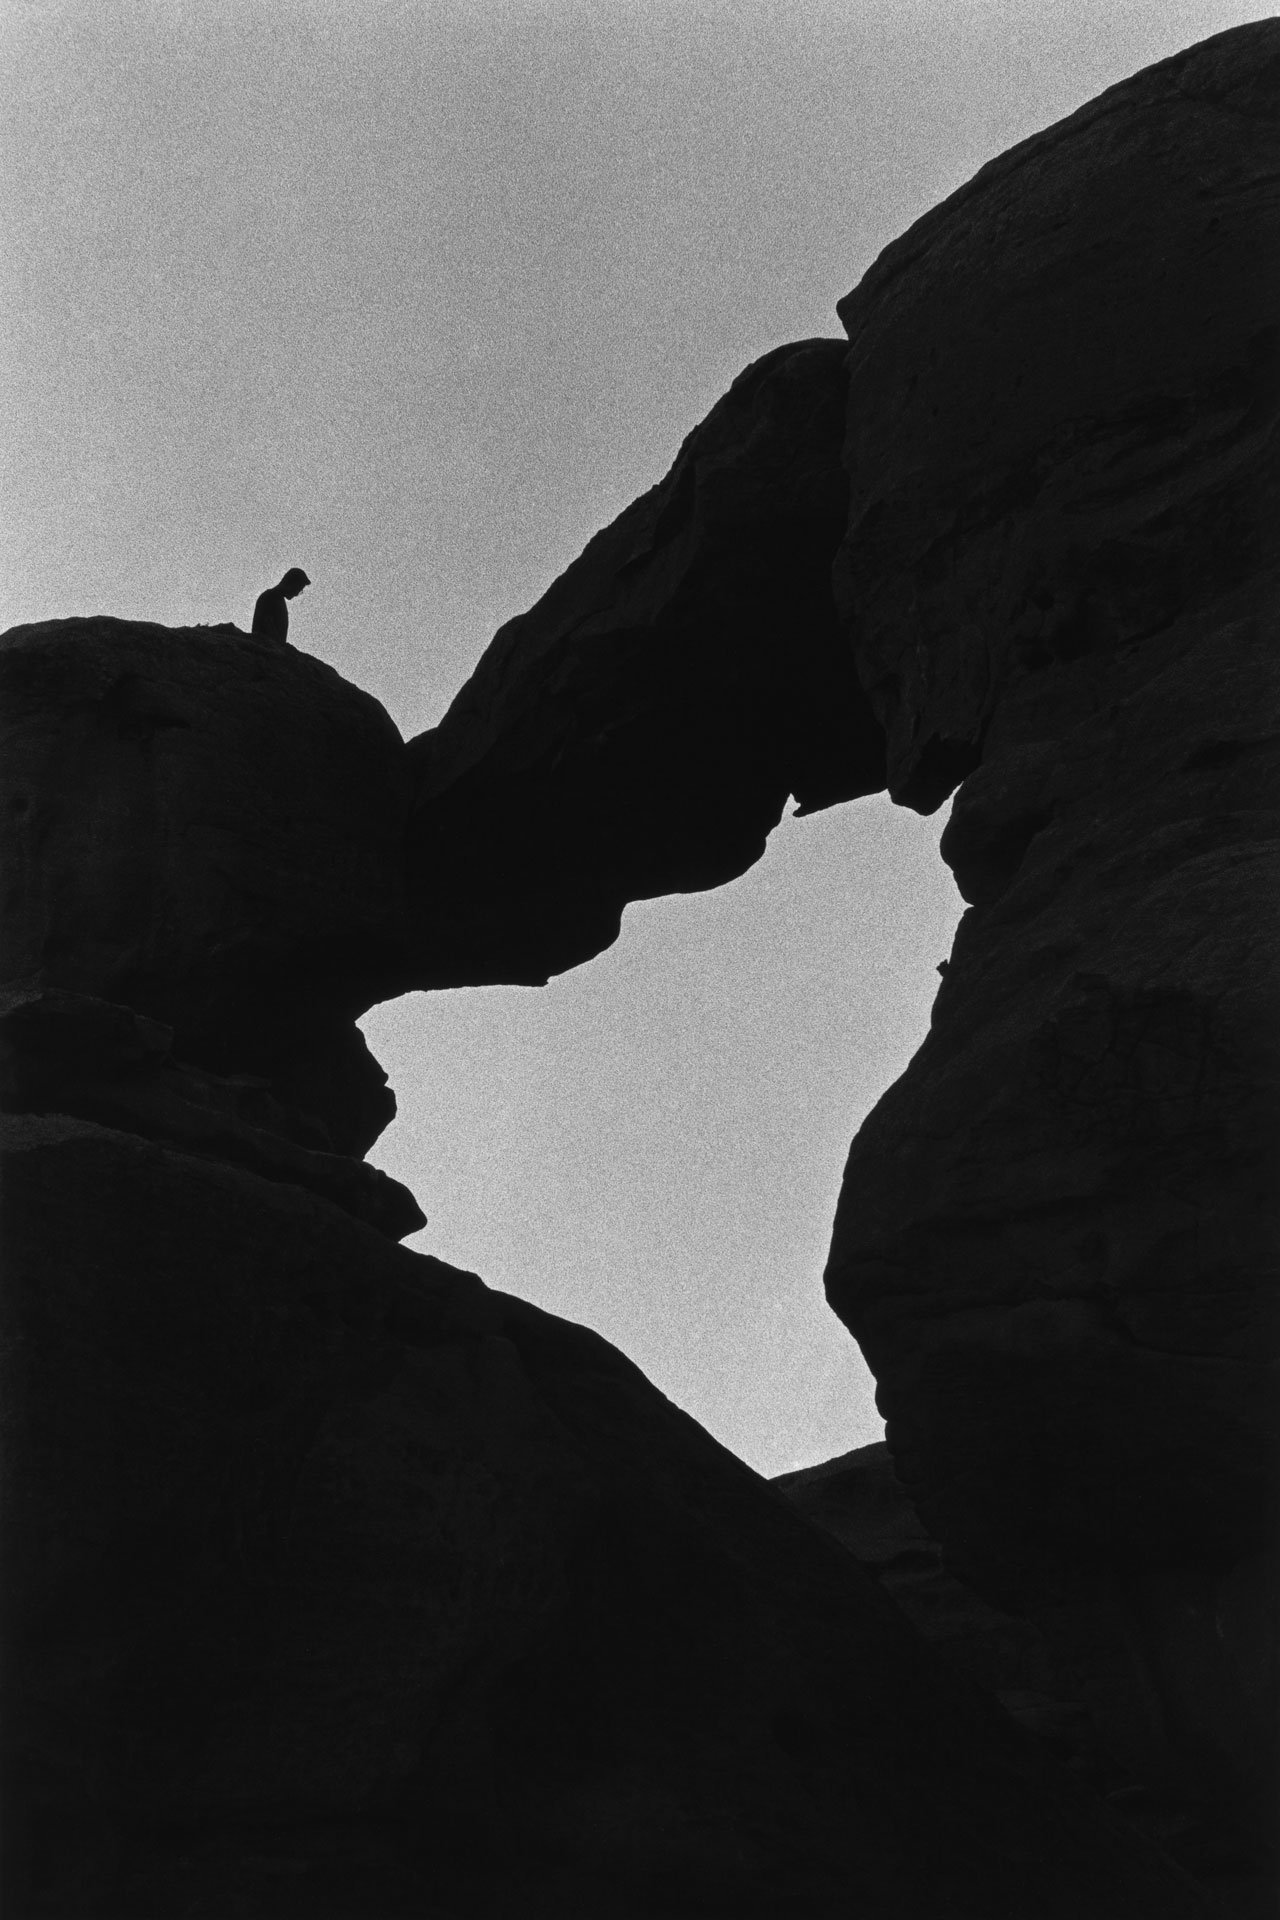 24---Untitled-(rock silhouette).jpg